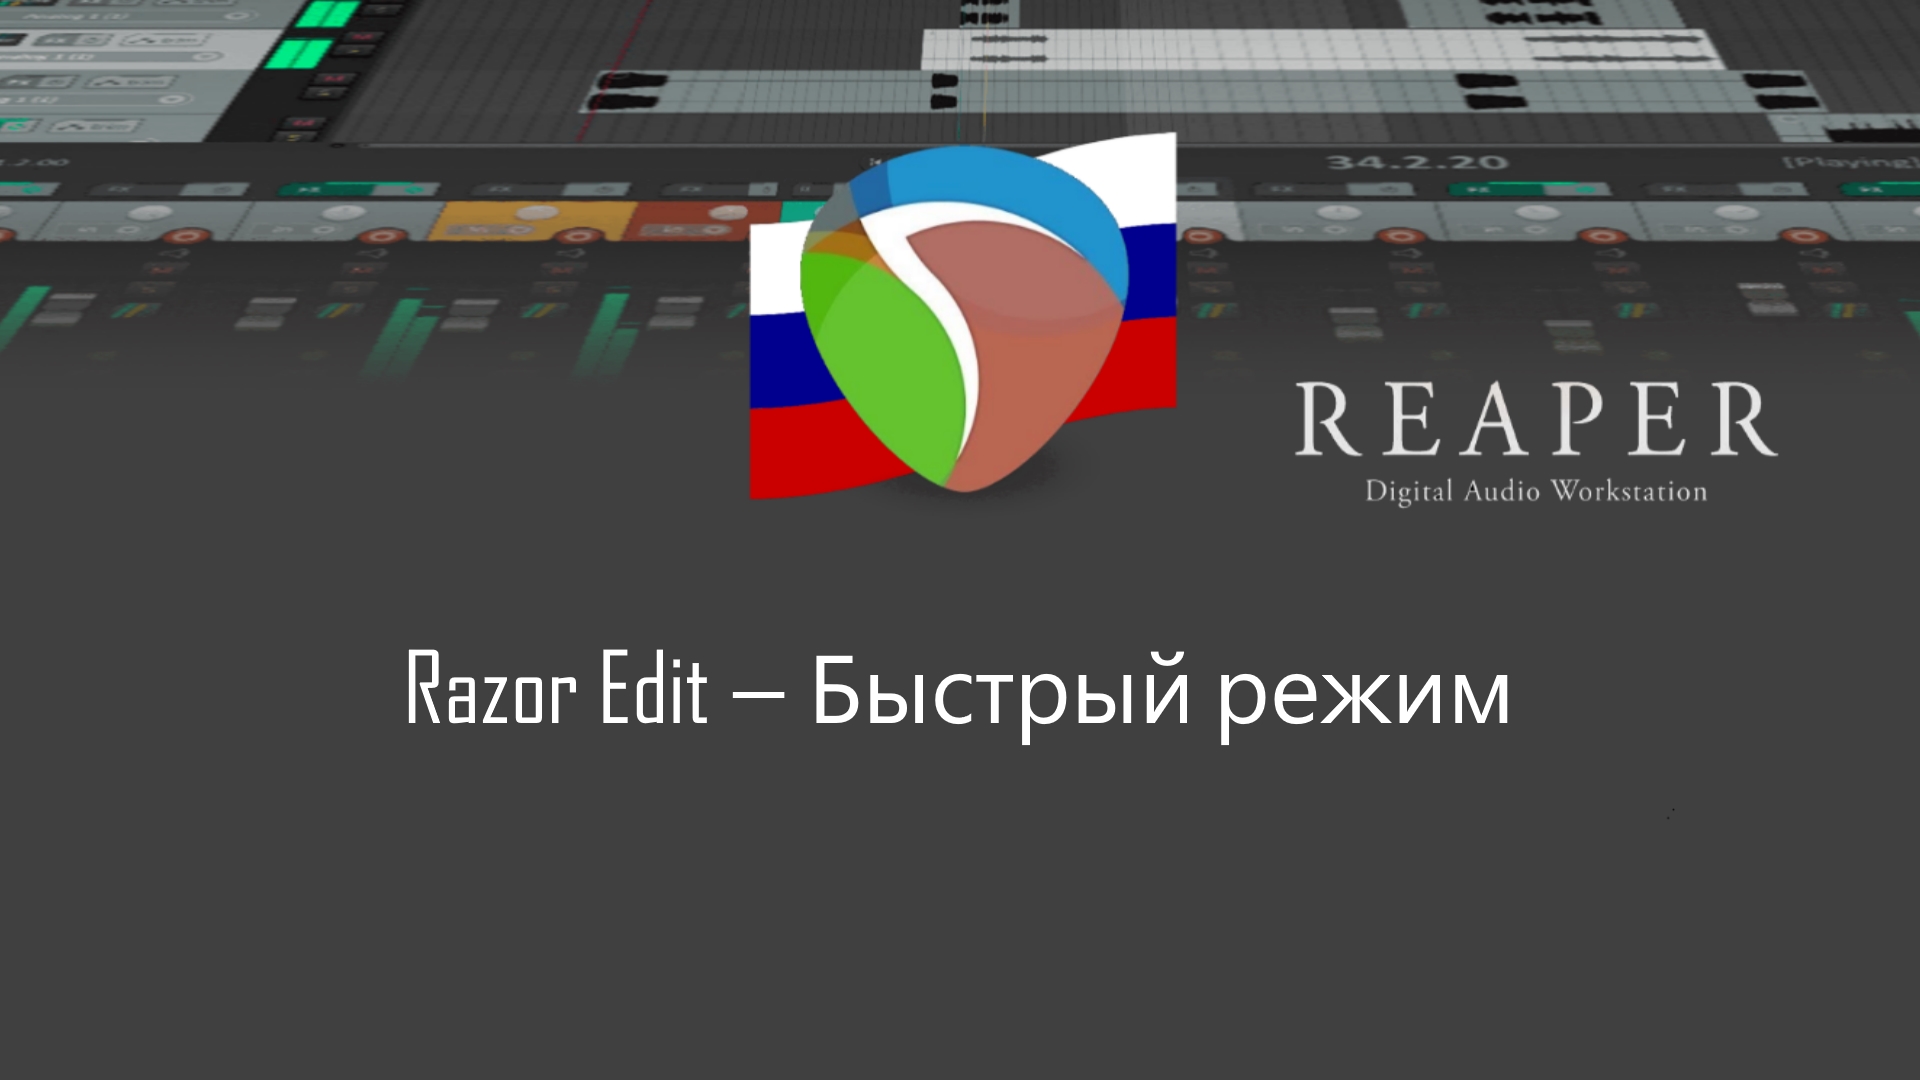 Razor Edit — быстрый режим в REAPER